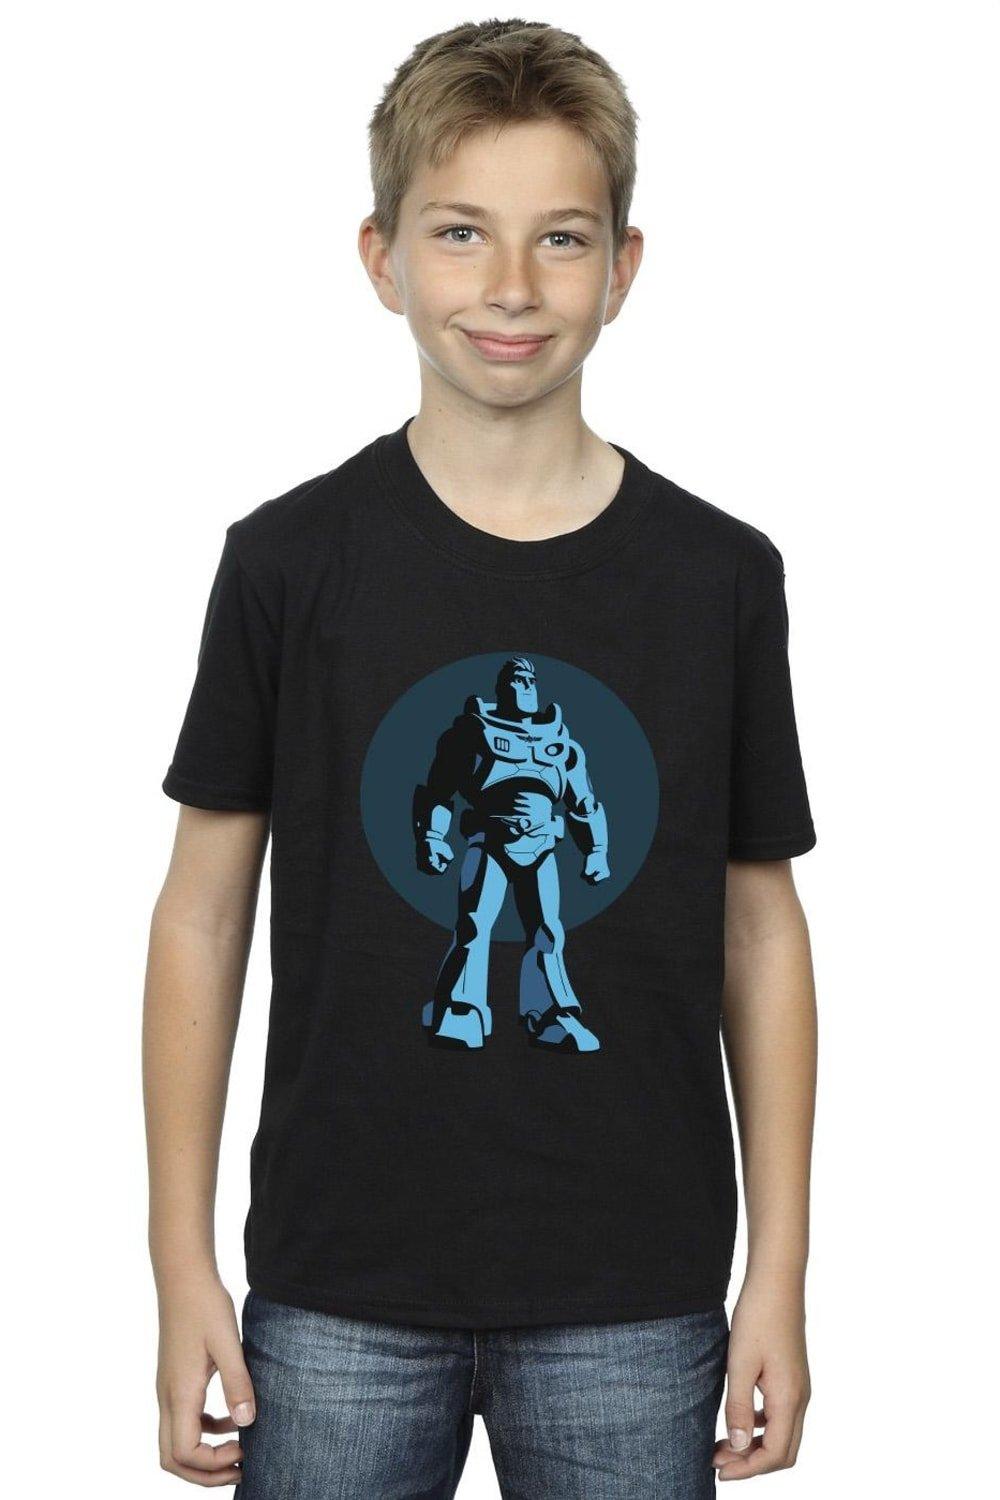 Lightyear Buzz Standing Circle T-Shirt